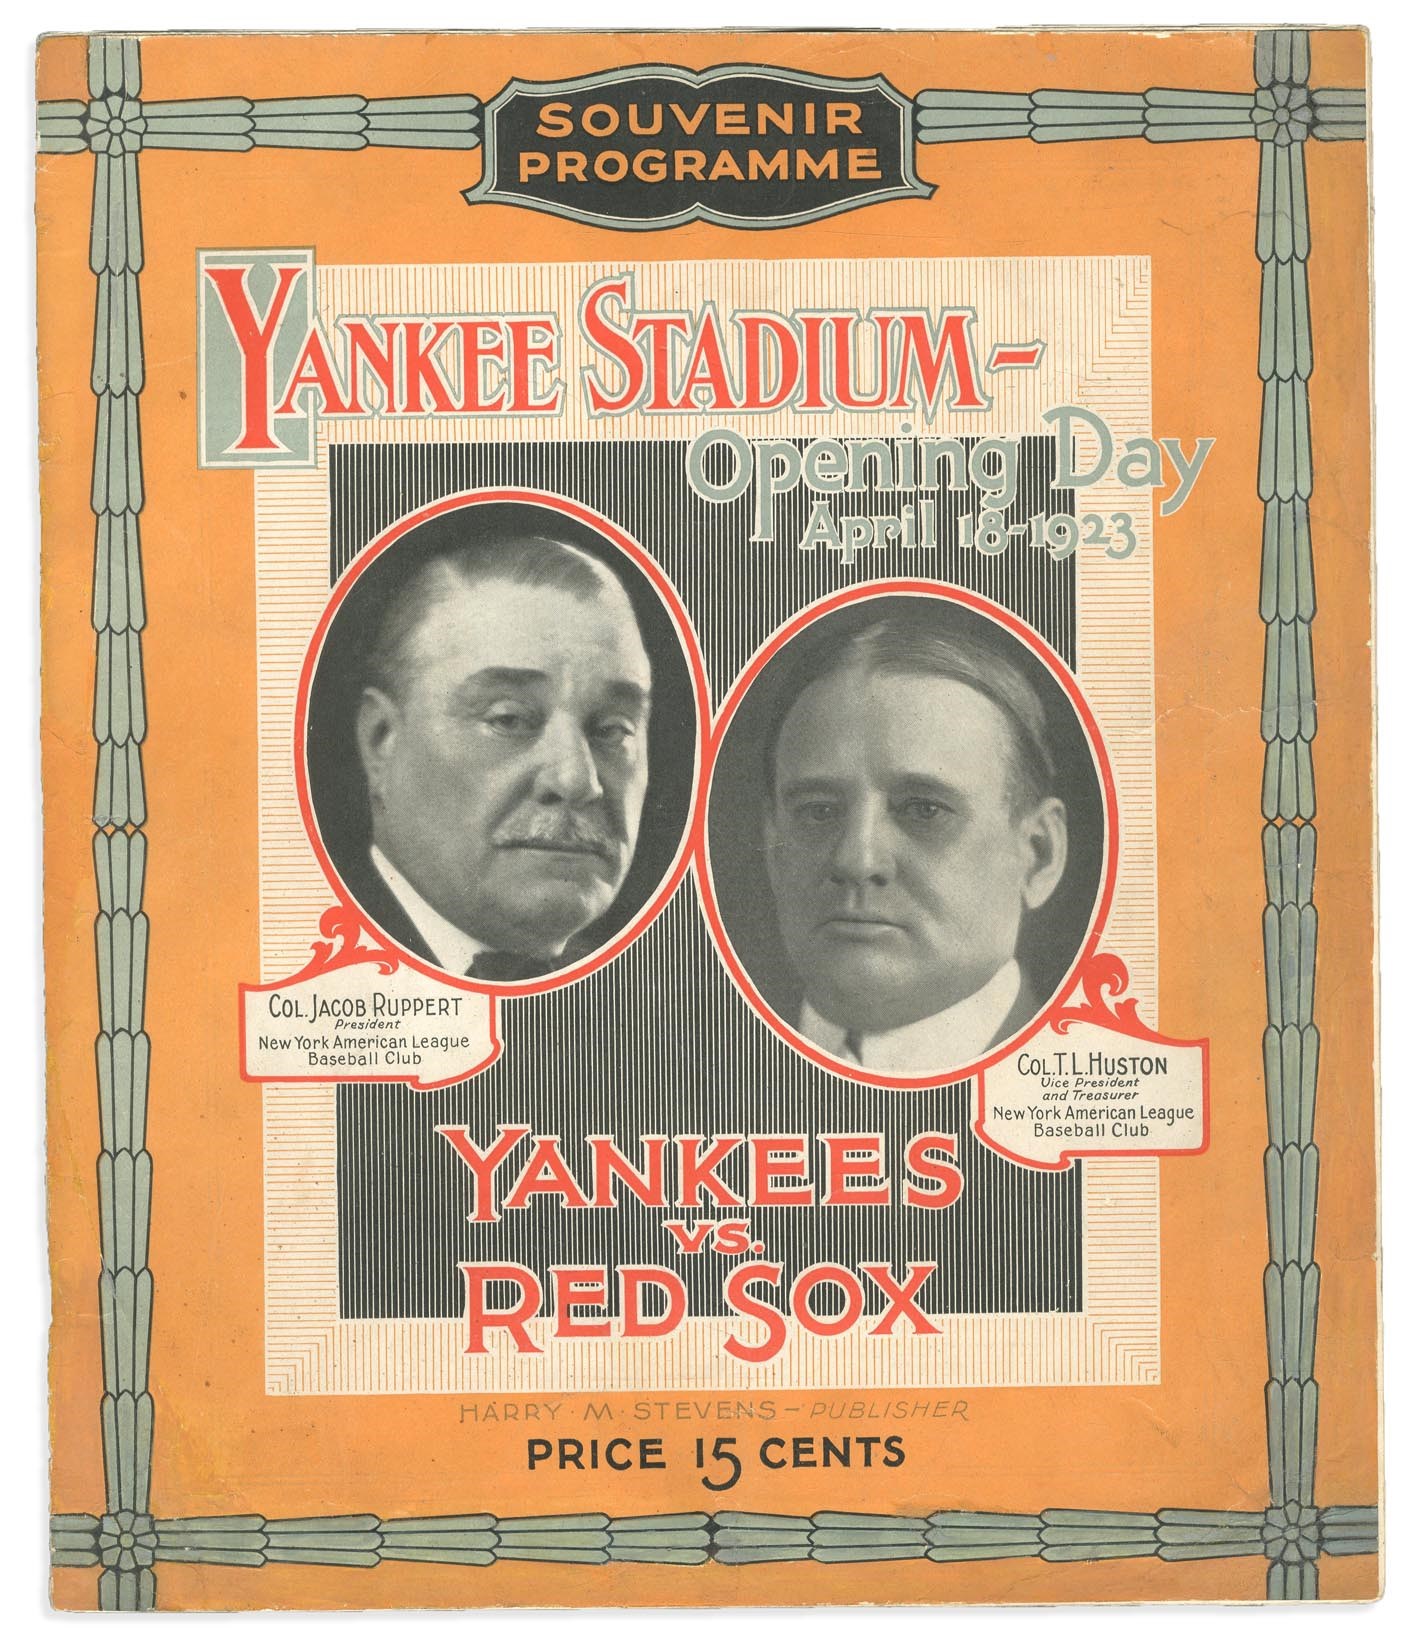 - 1923 Opening Day at Yankee Stadium Program